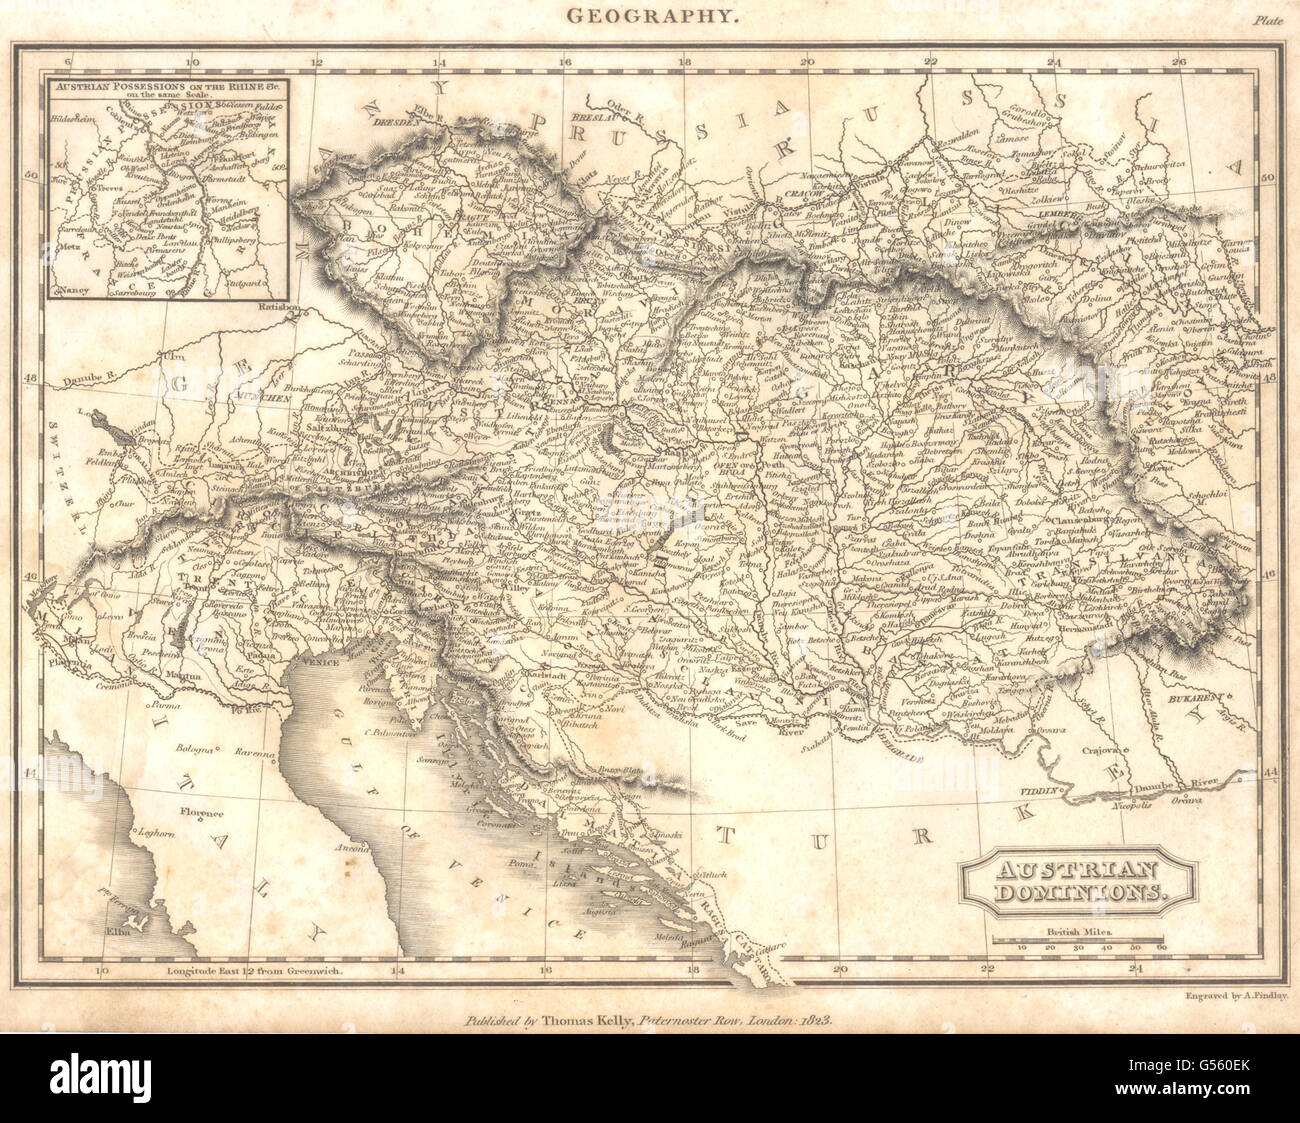 AUSTRIA-HUNGARY:Austrian Dominions;Austrian possessions on the Rhine., 1830 map Stock Photo